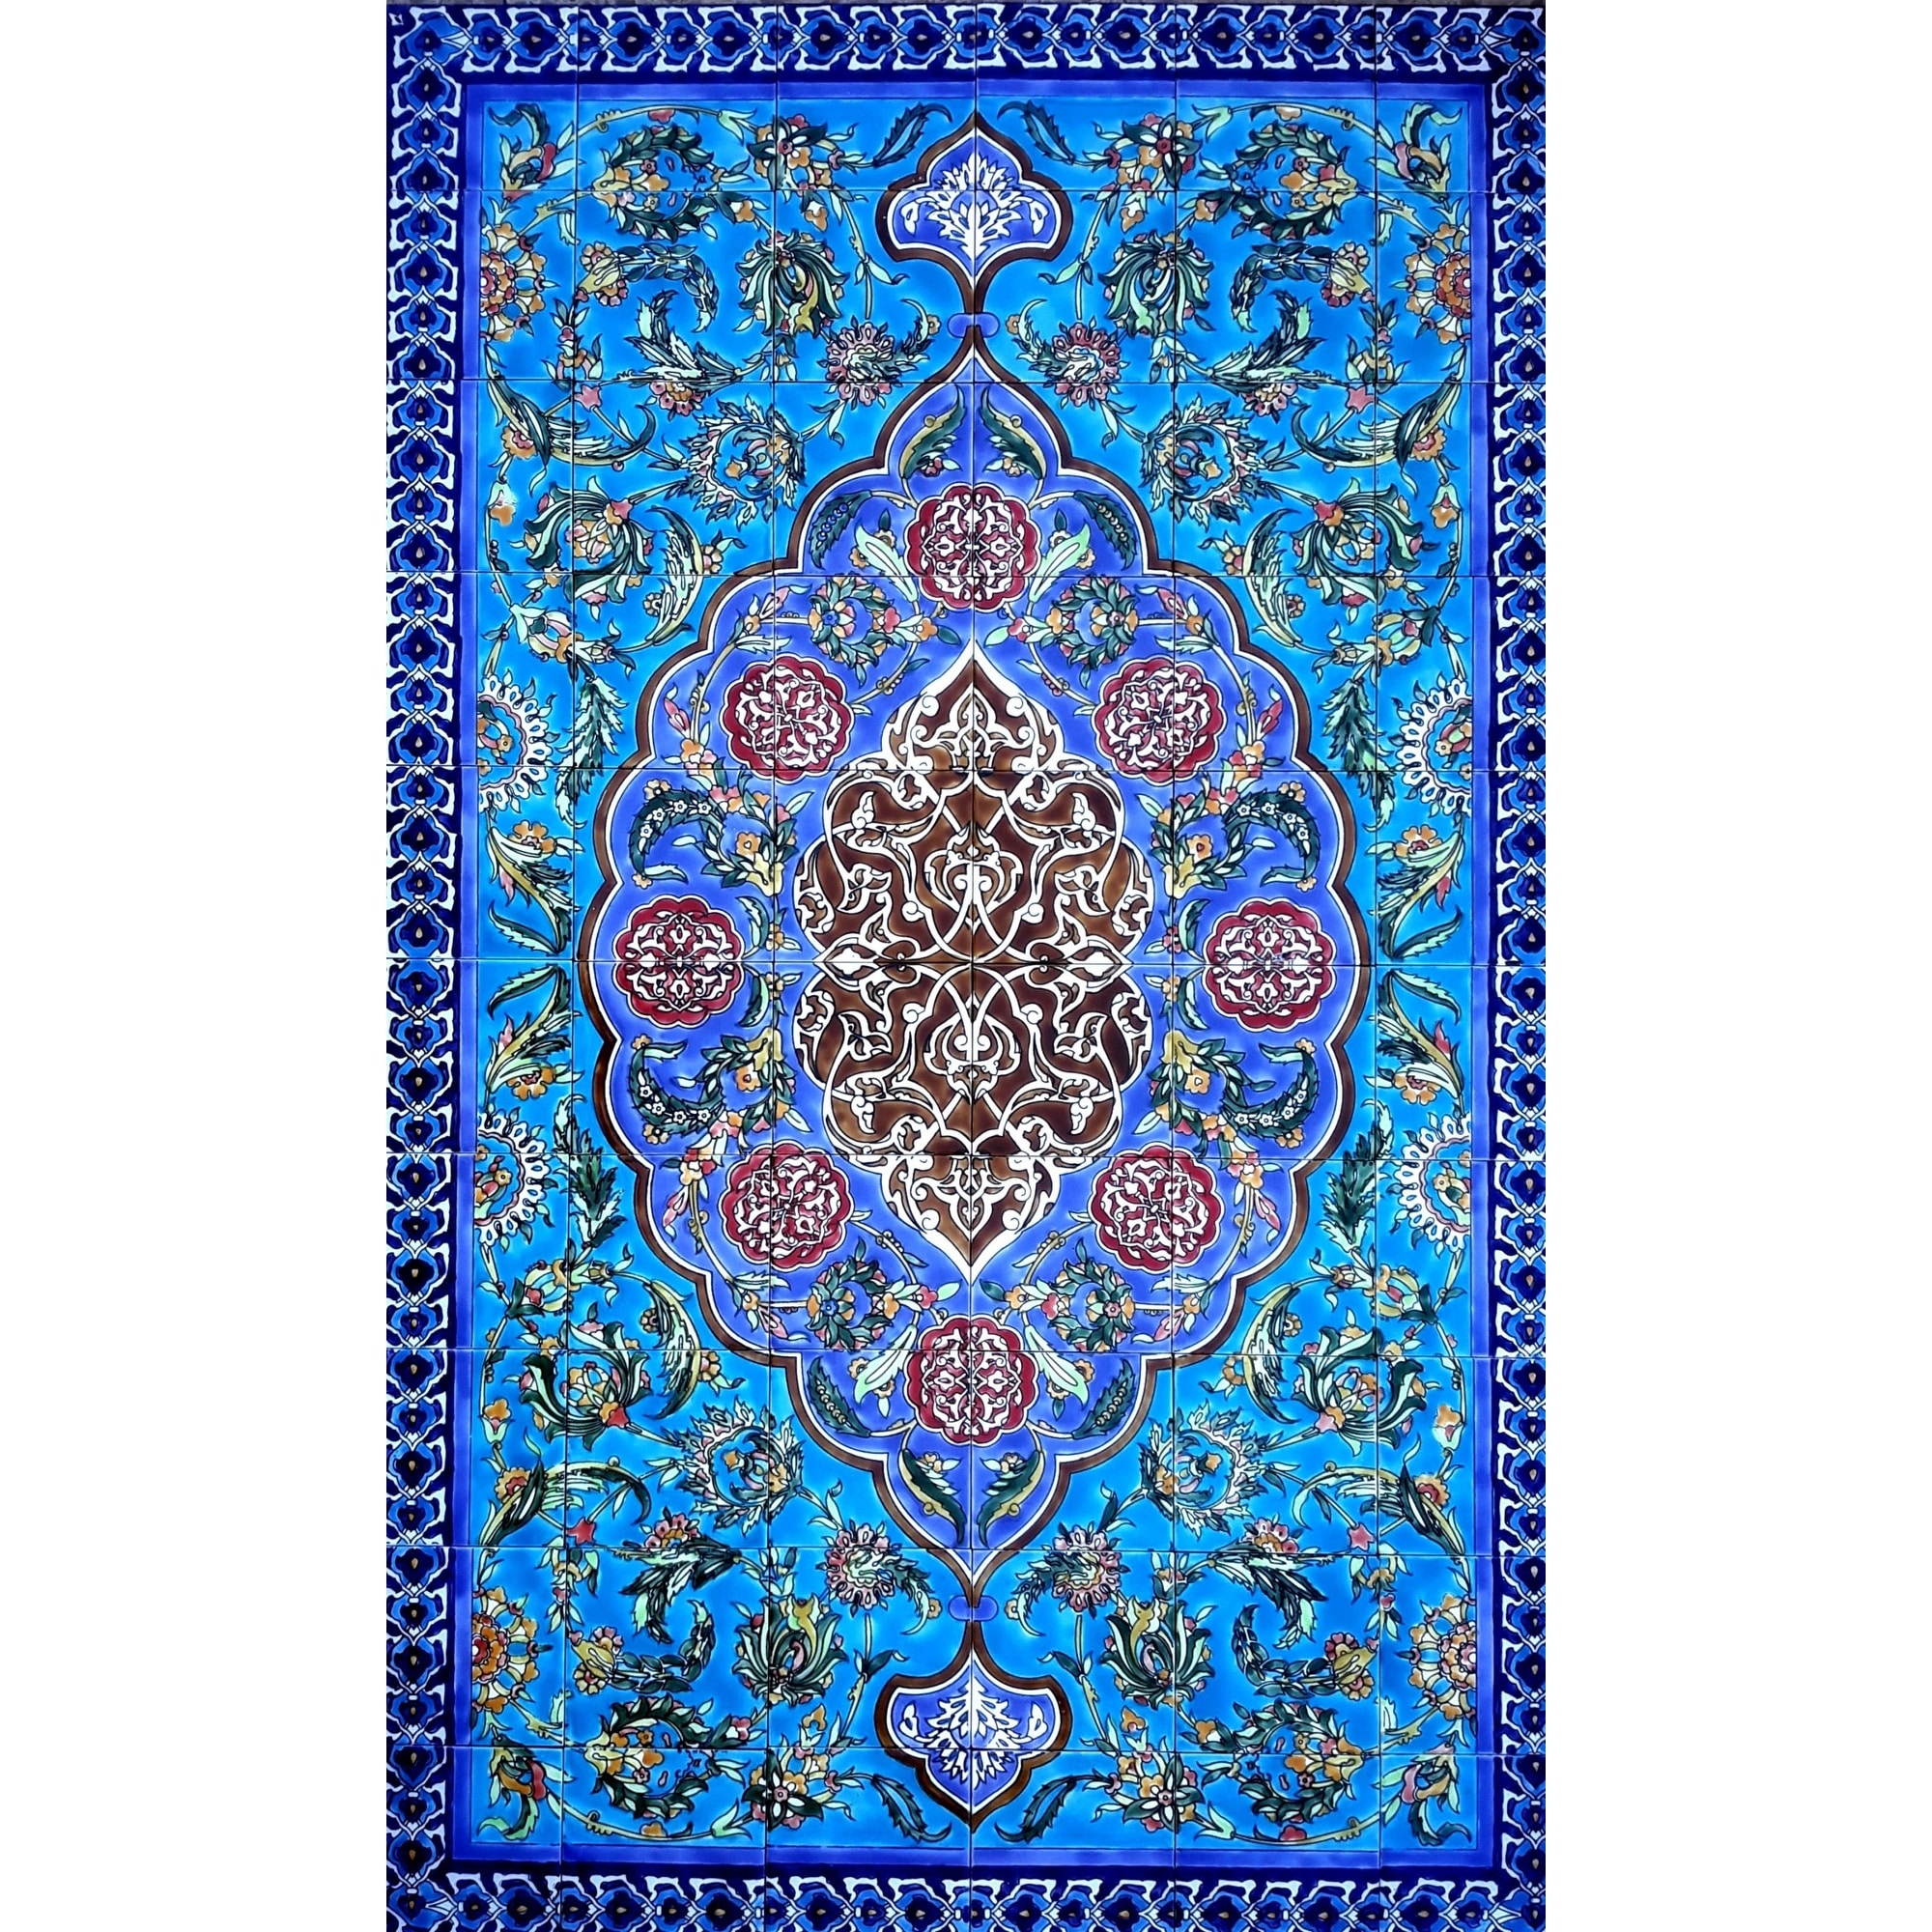 18in x 18in Intricate Area Rug Persian Design 18pc Ceramic Tiles Set